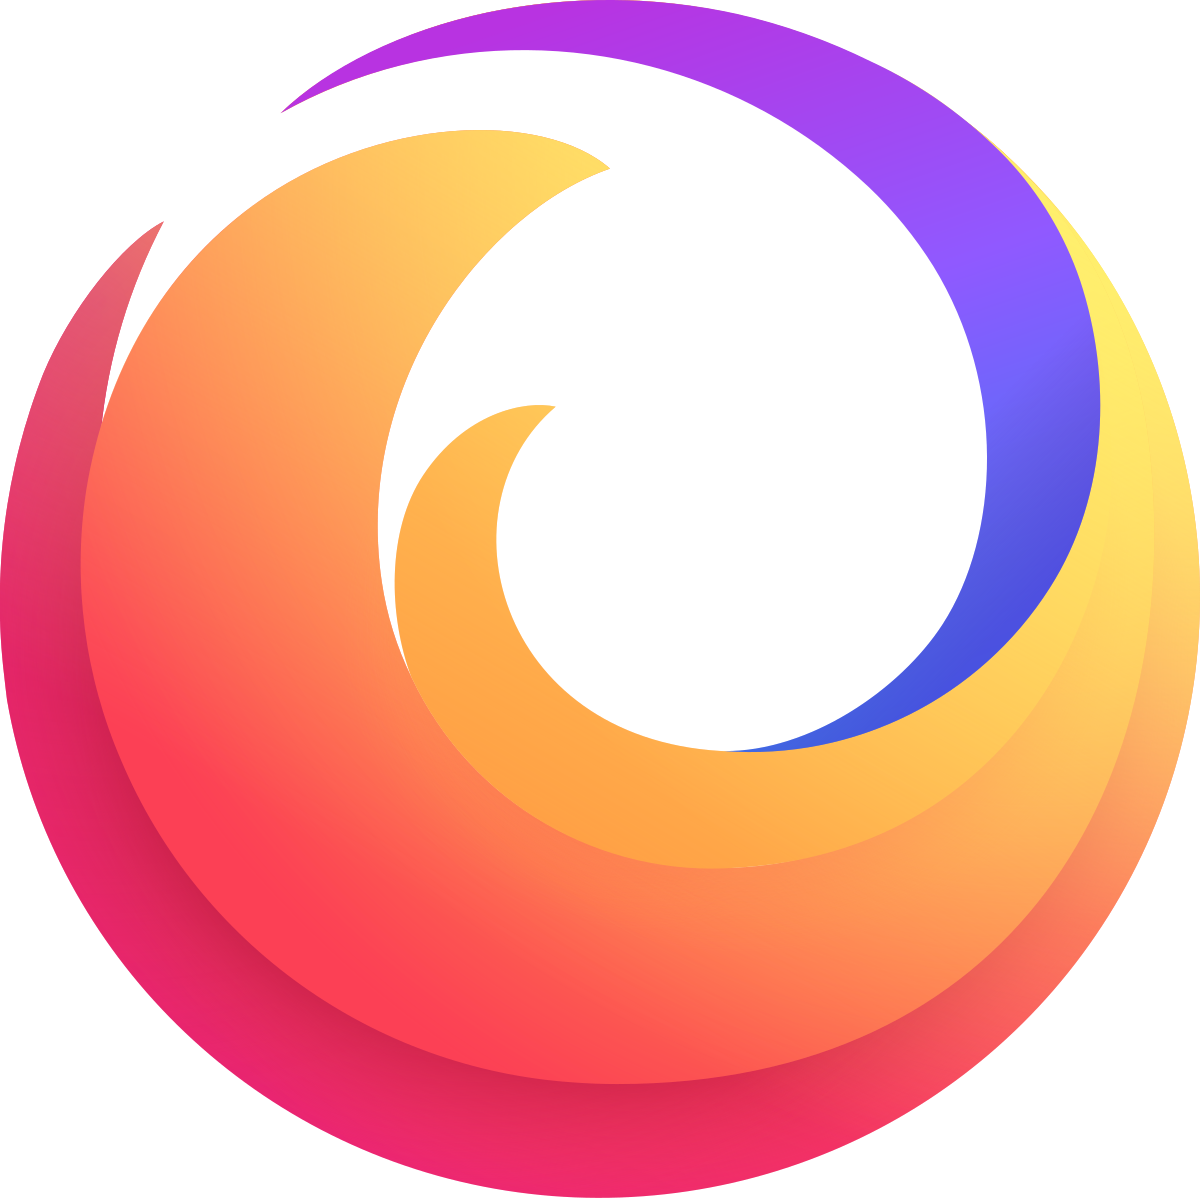 Firefox Logo PNG Image HD